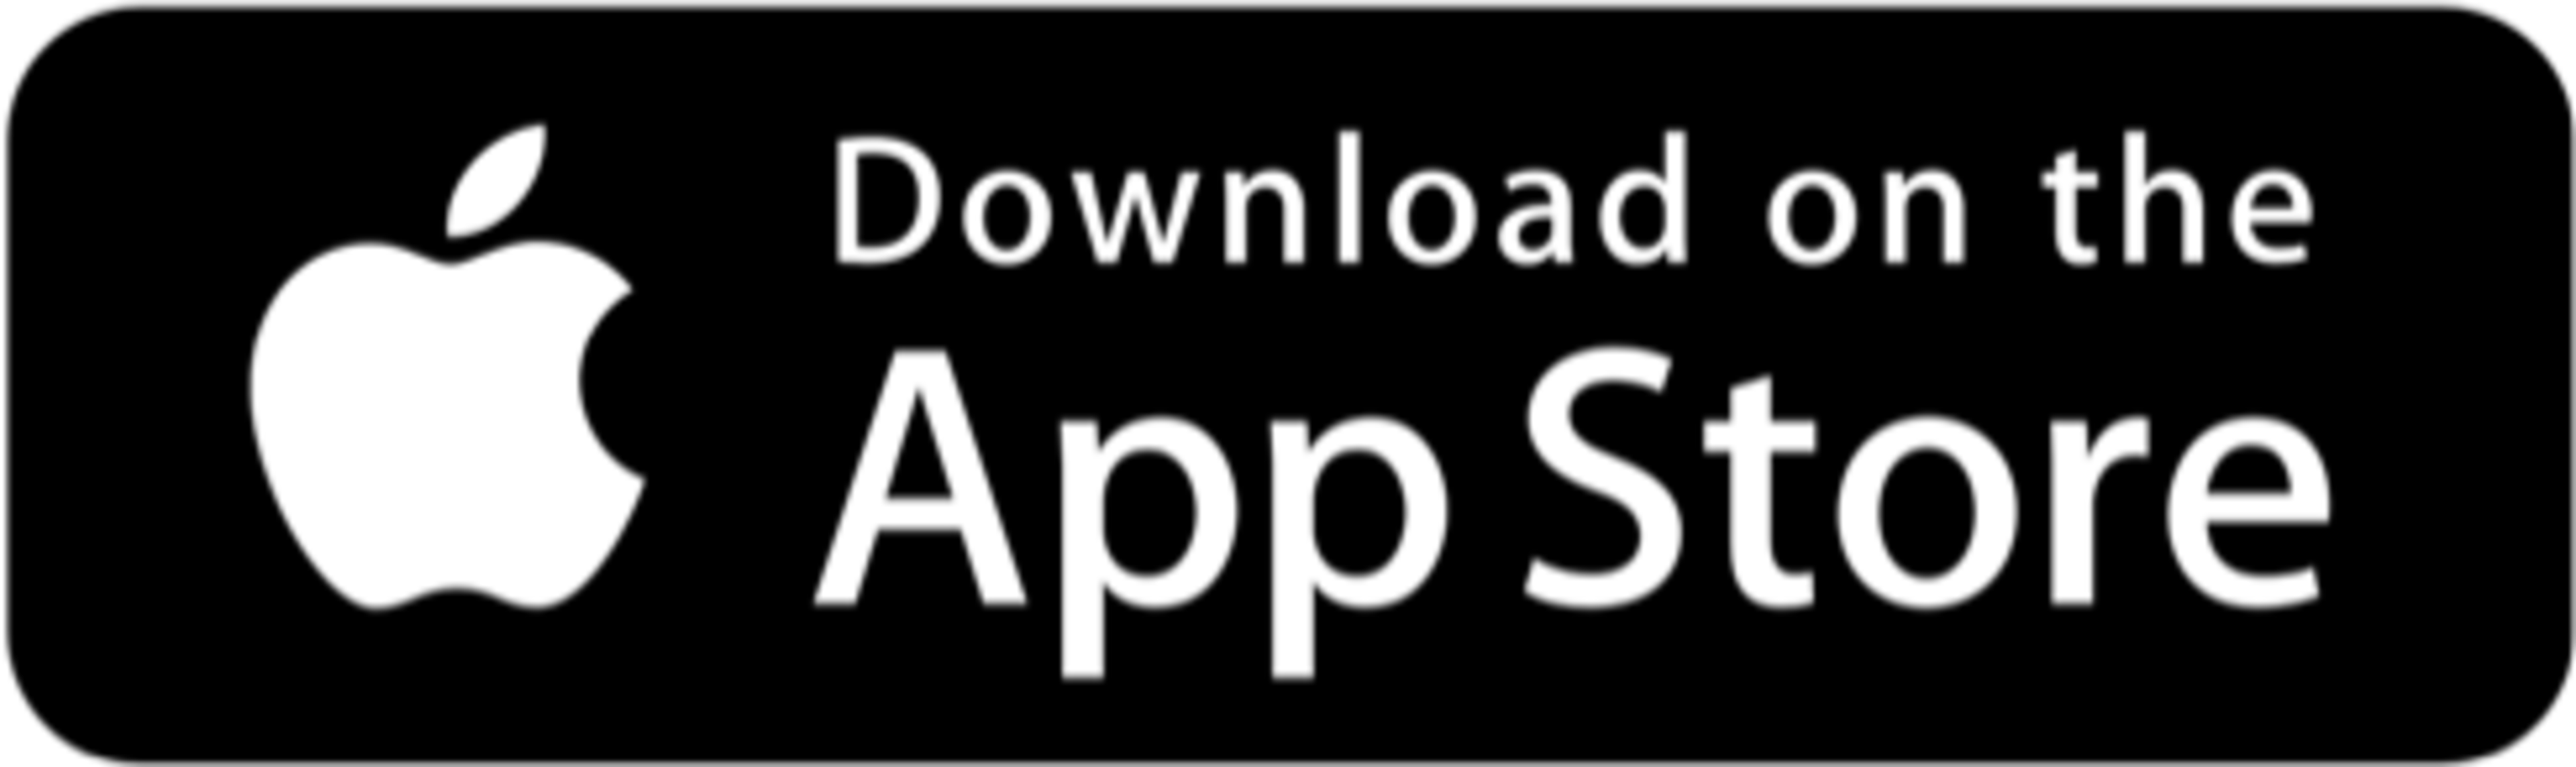 Download Disney Plus Bahrain App now on app store